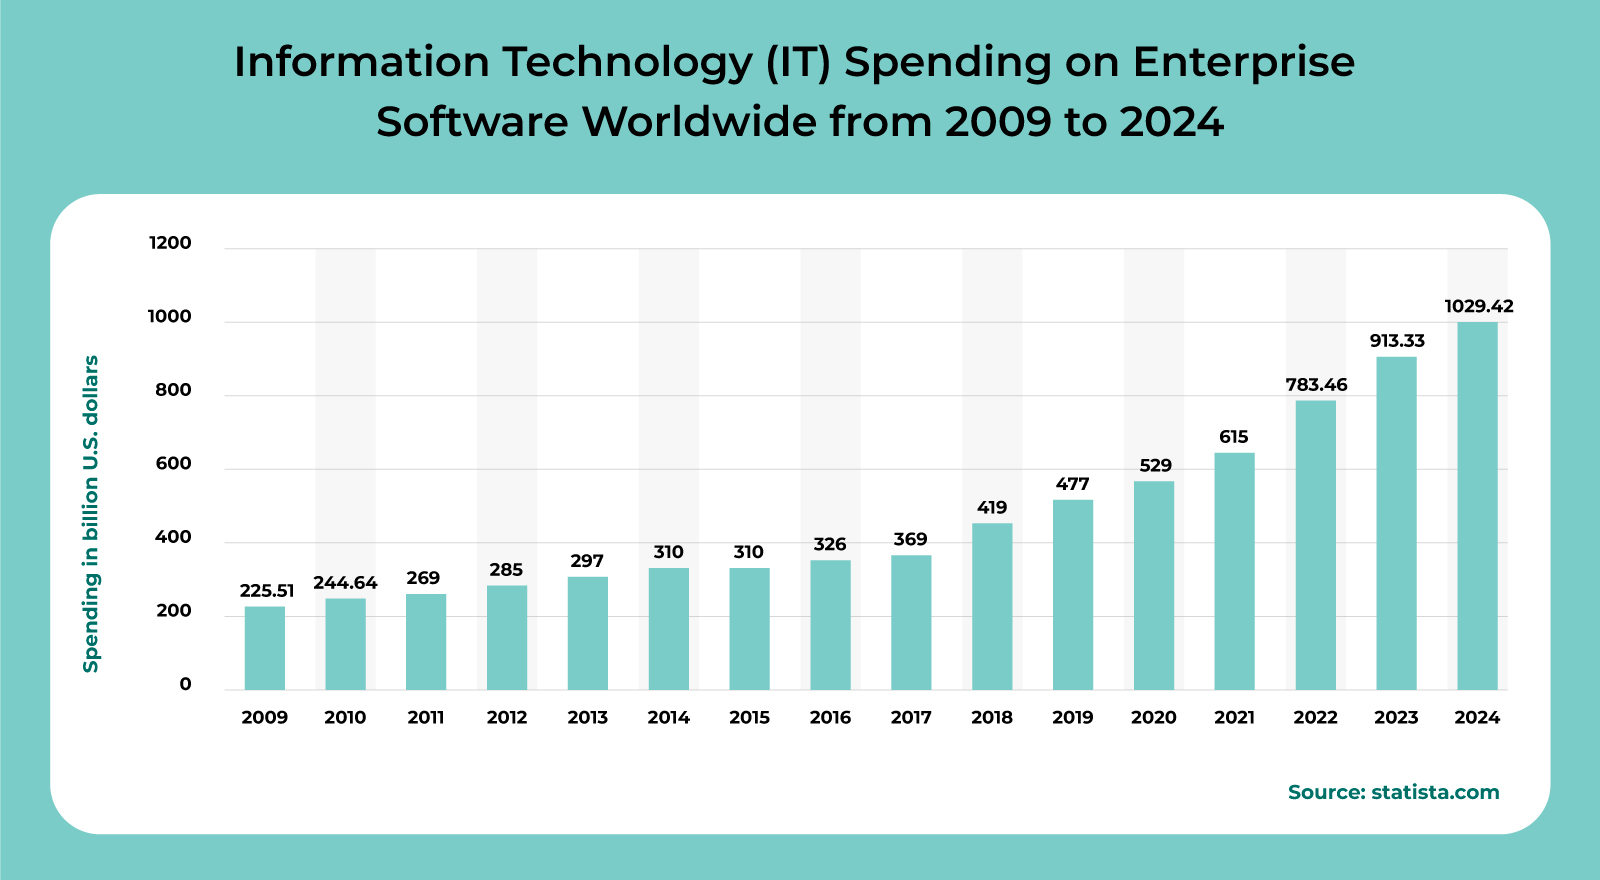 IT spending on enterprise software